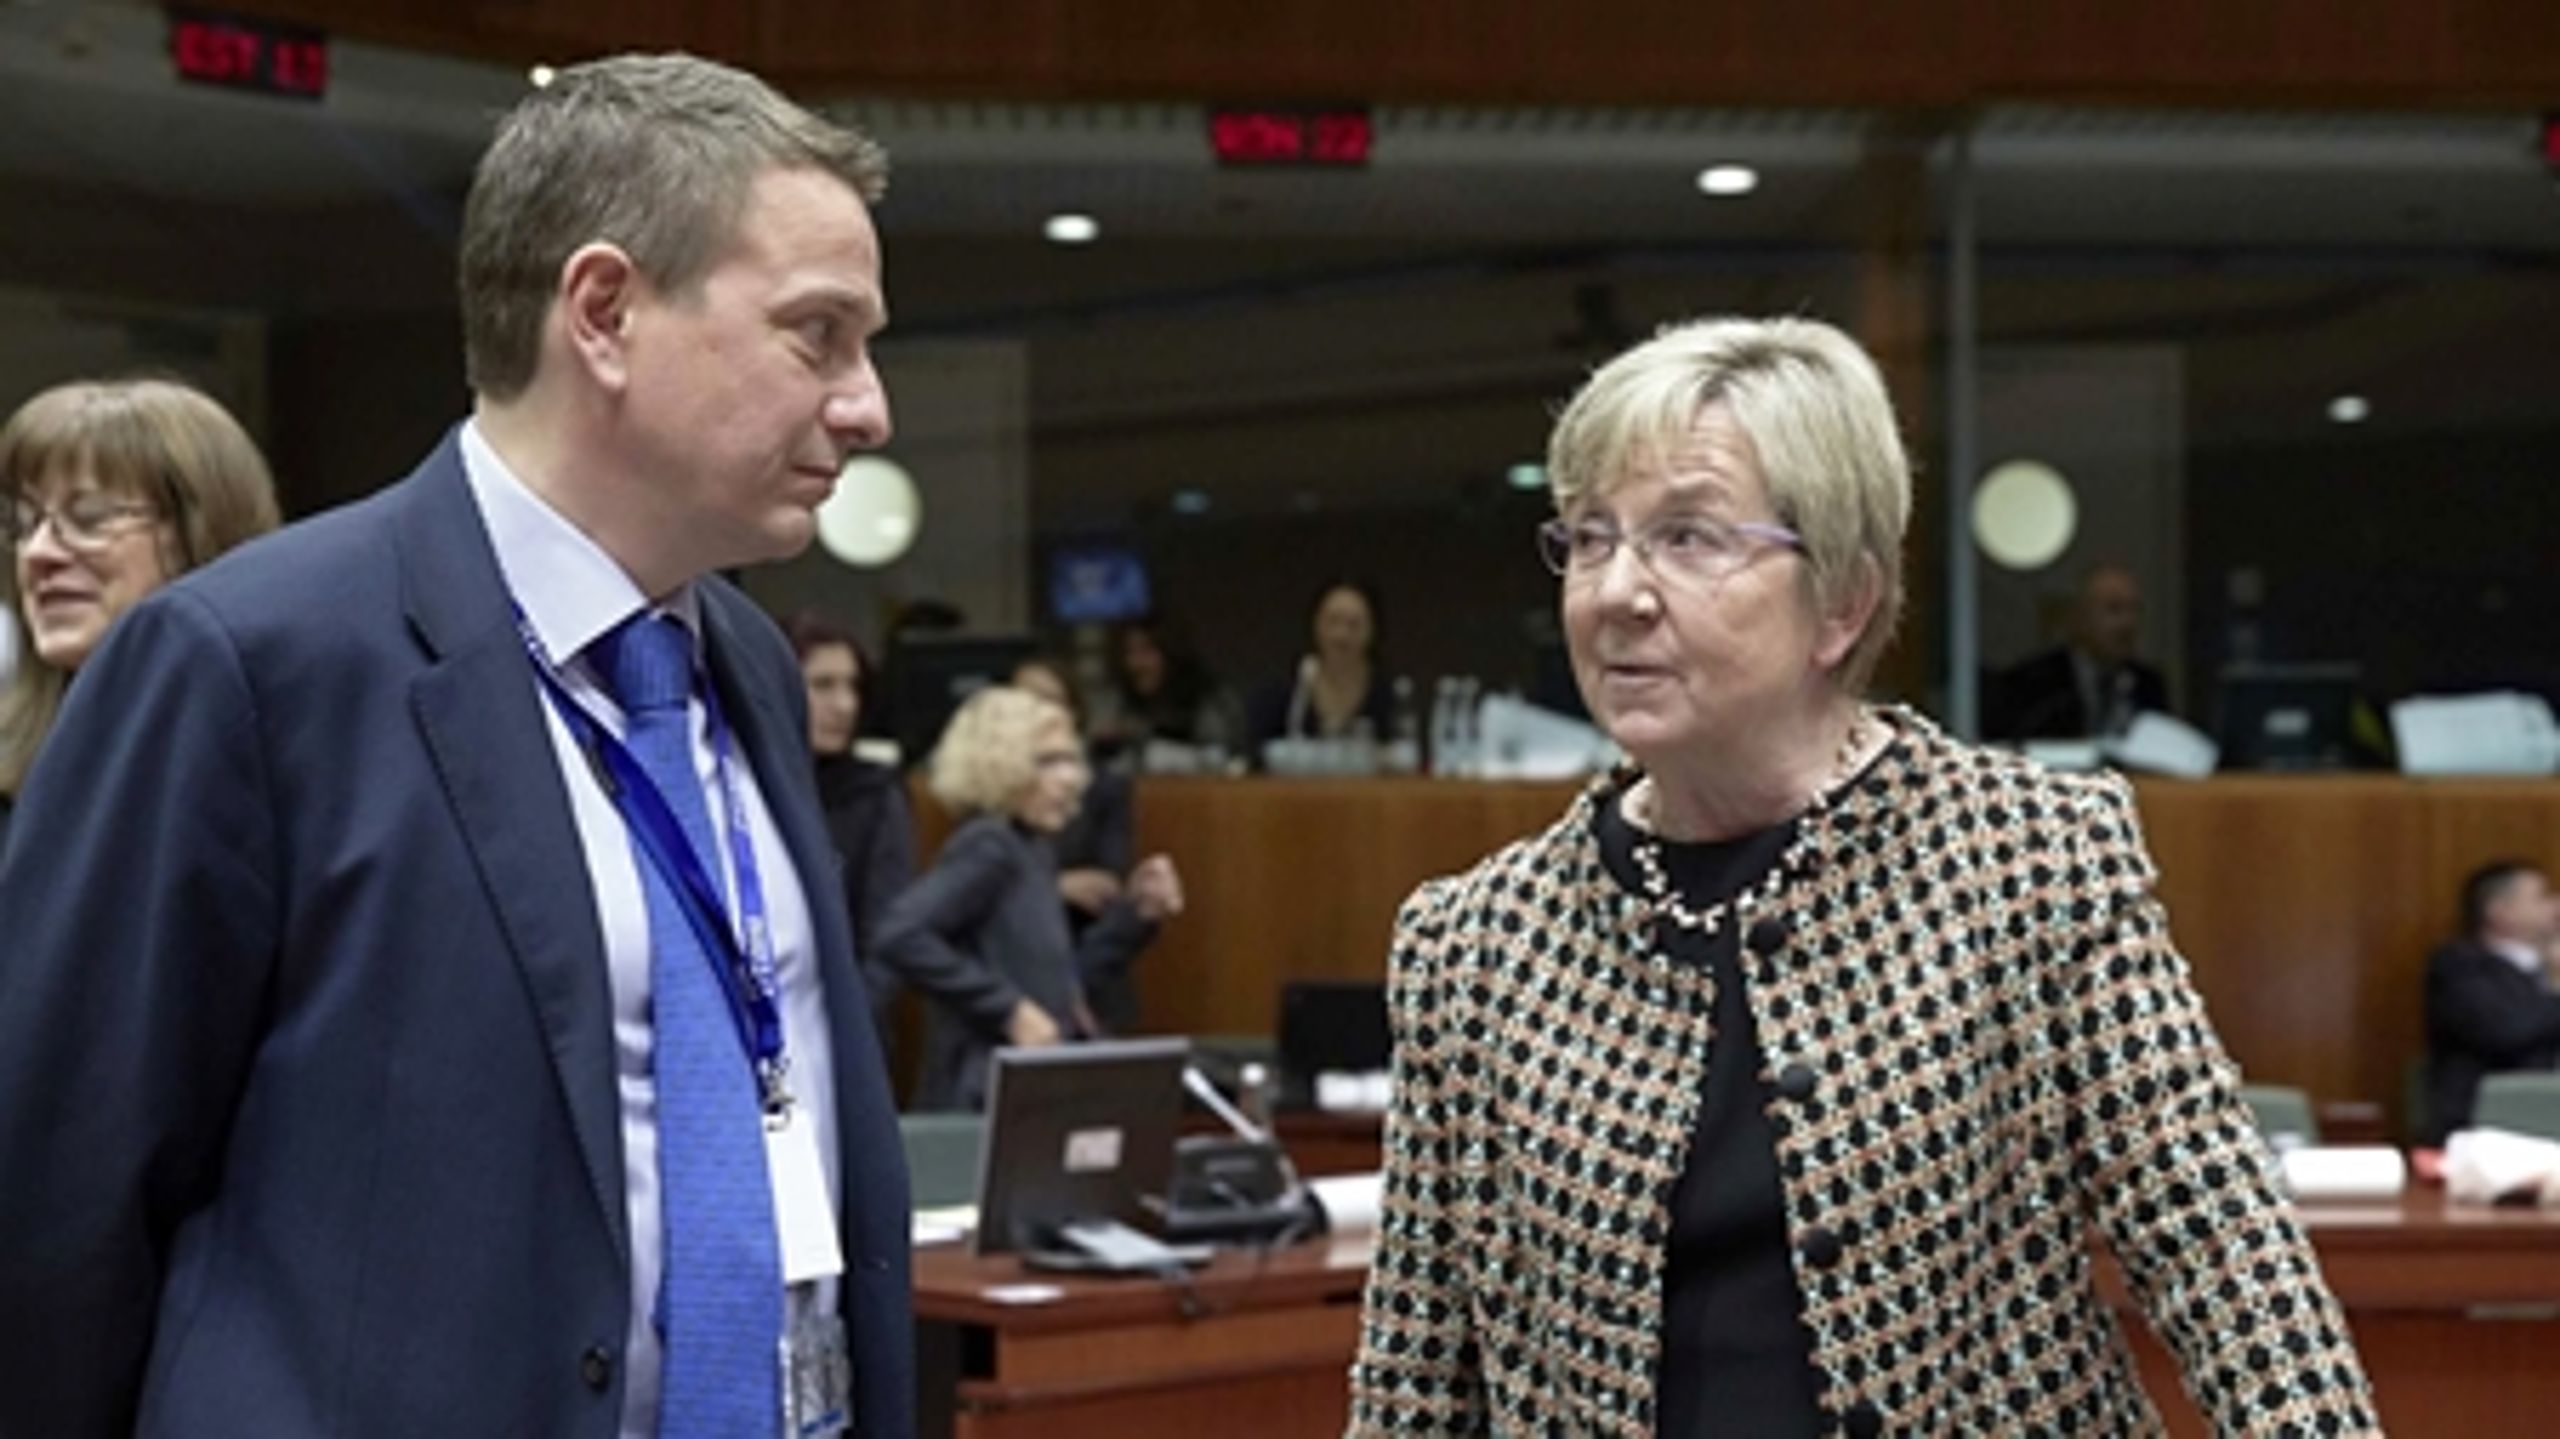 Kulturminister Marianne Jelved (R) under tirsdagens Rådsmøde i Bruxelles.